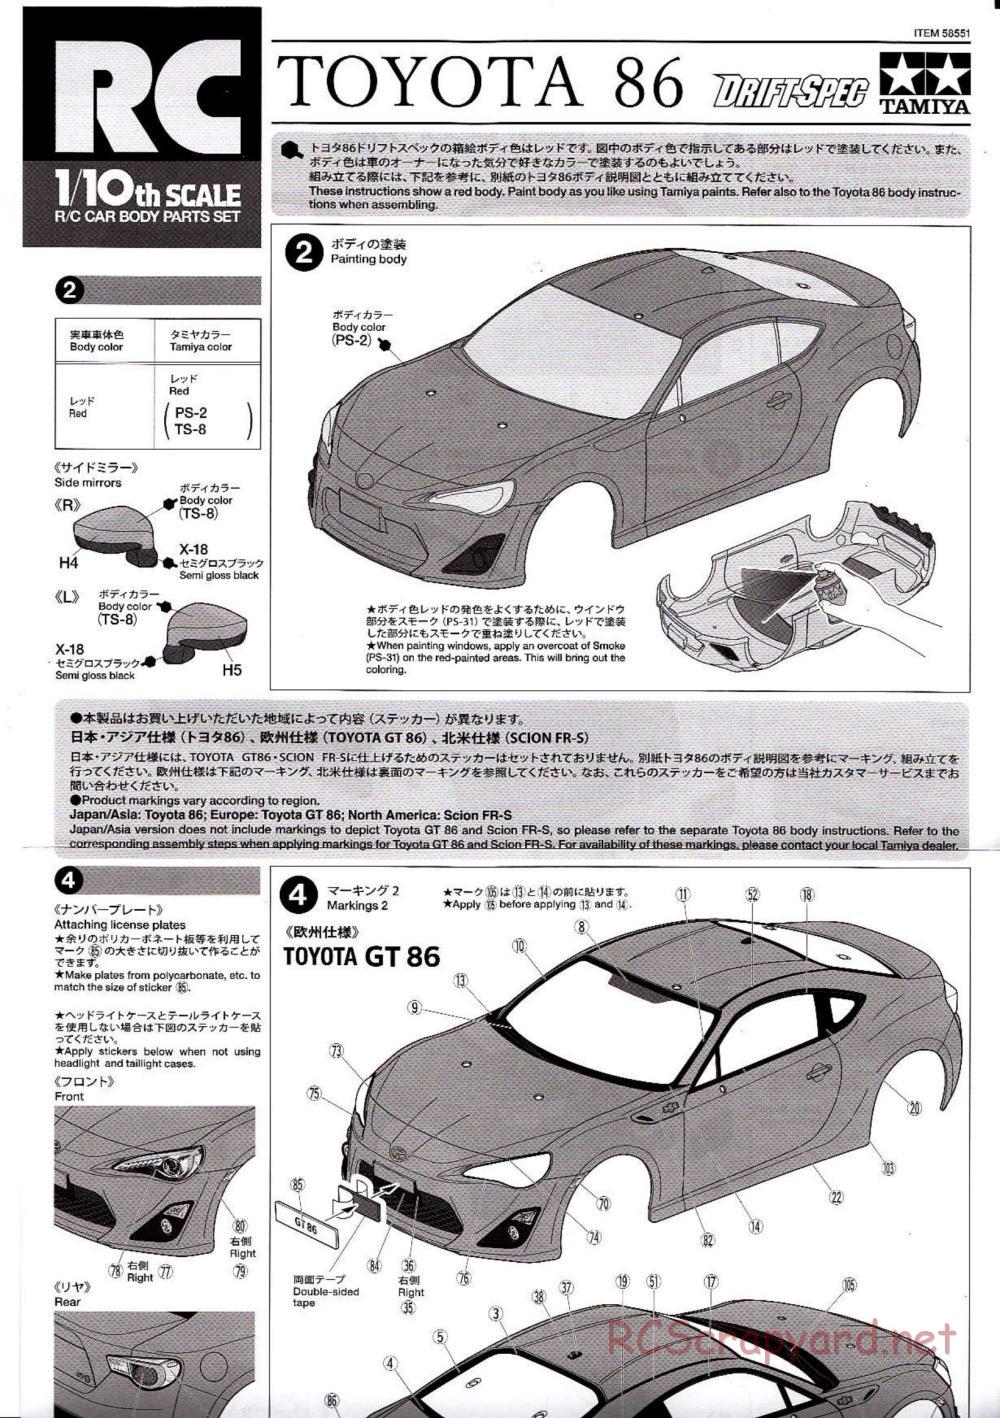 Tamiya - Toyota 86 - Drift Spec - TT-01ED Chassis - Body Manual - Page 1